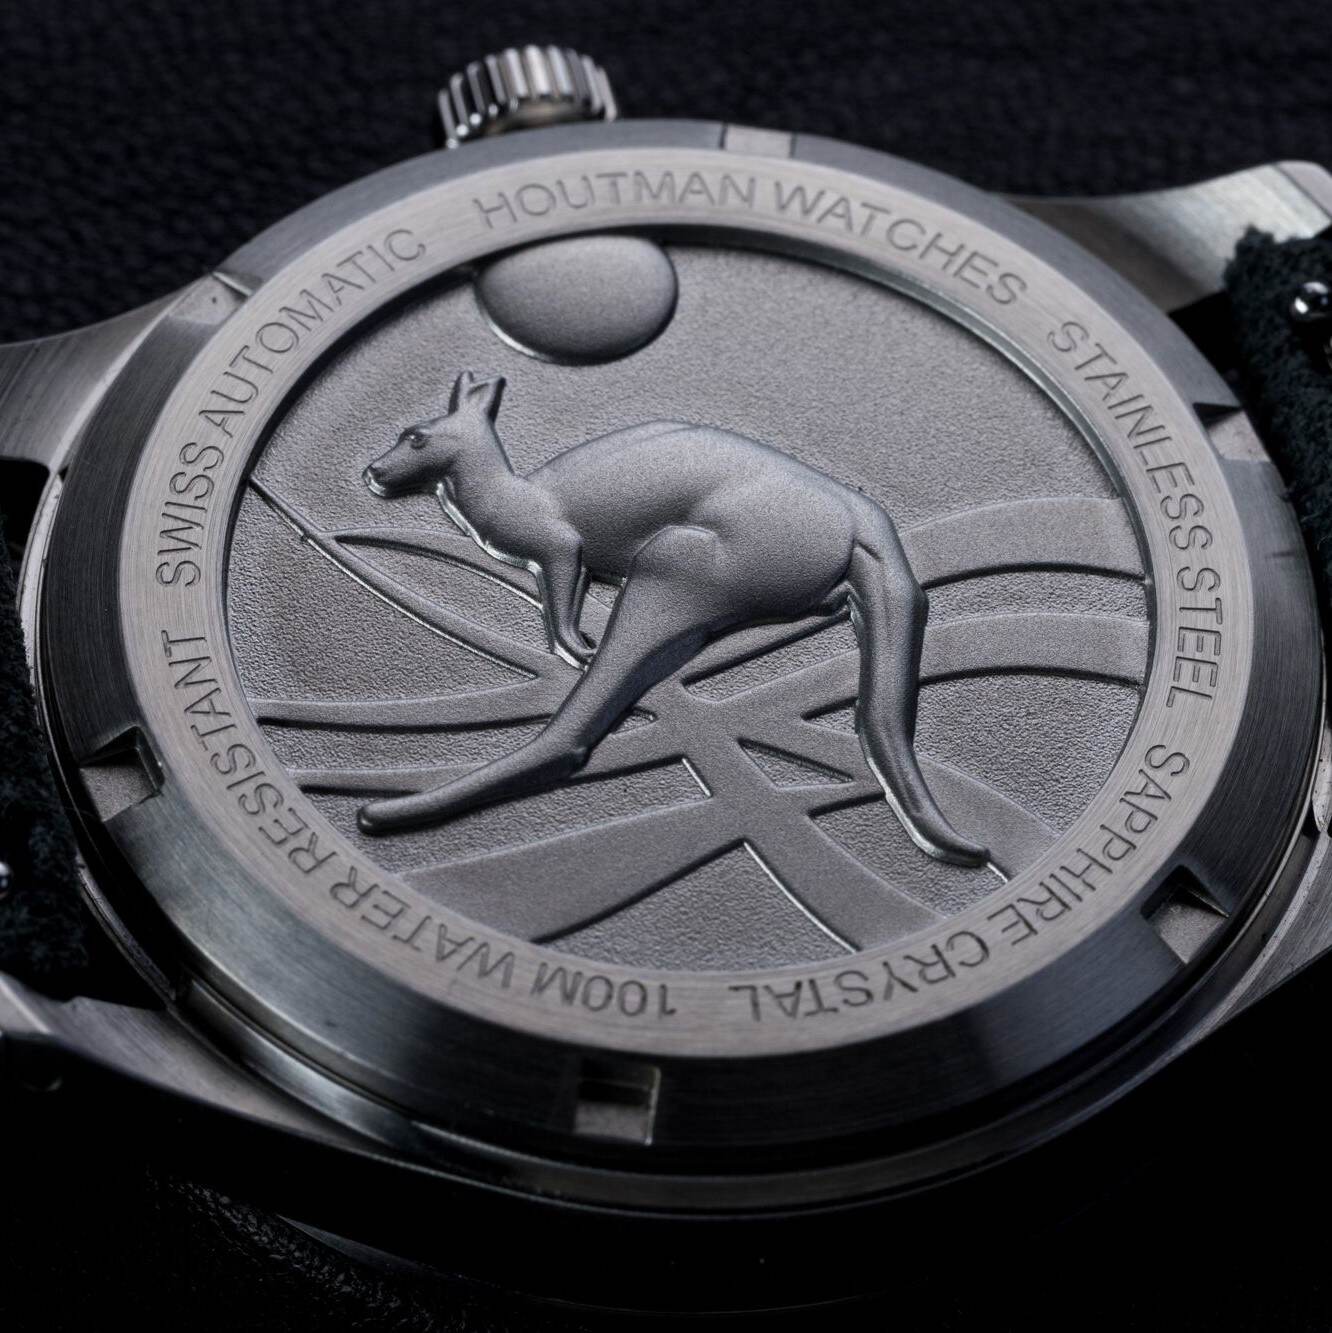 Wristwatch case back with kangaroo image